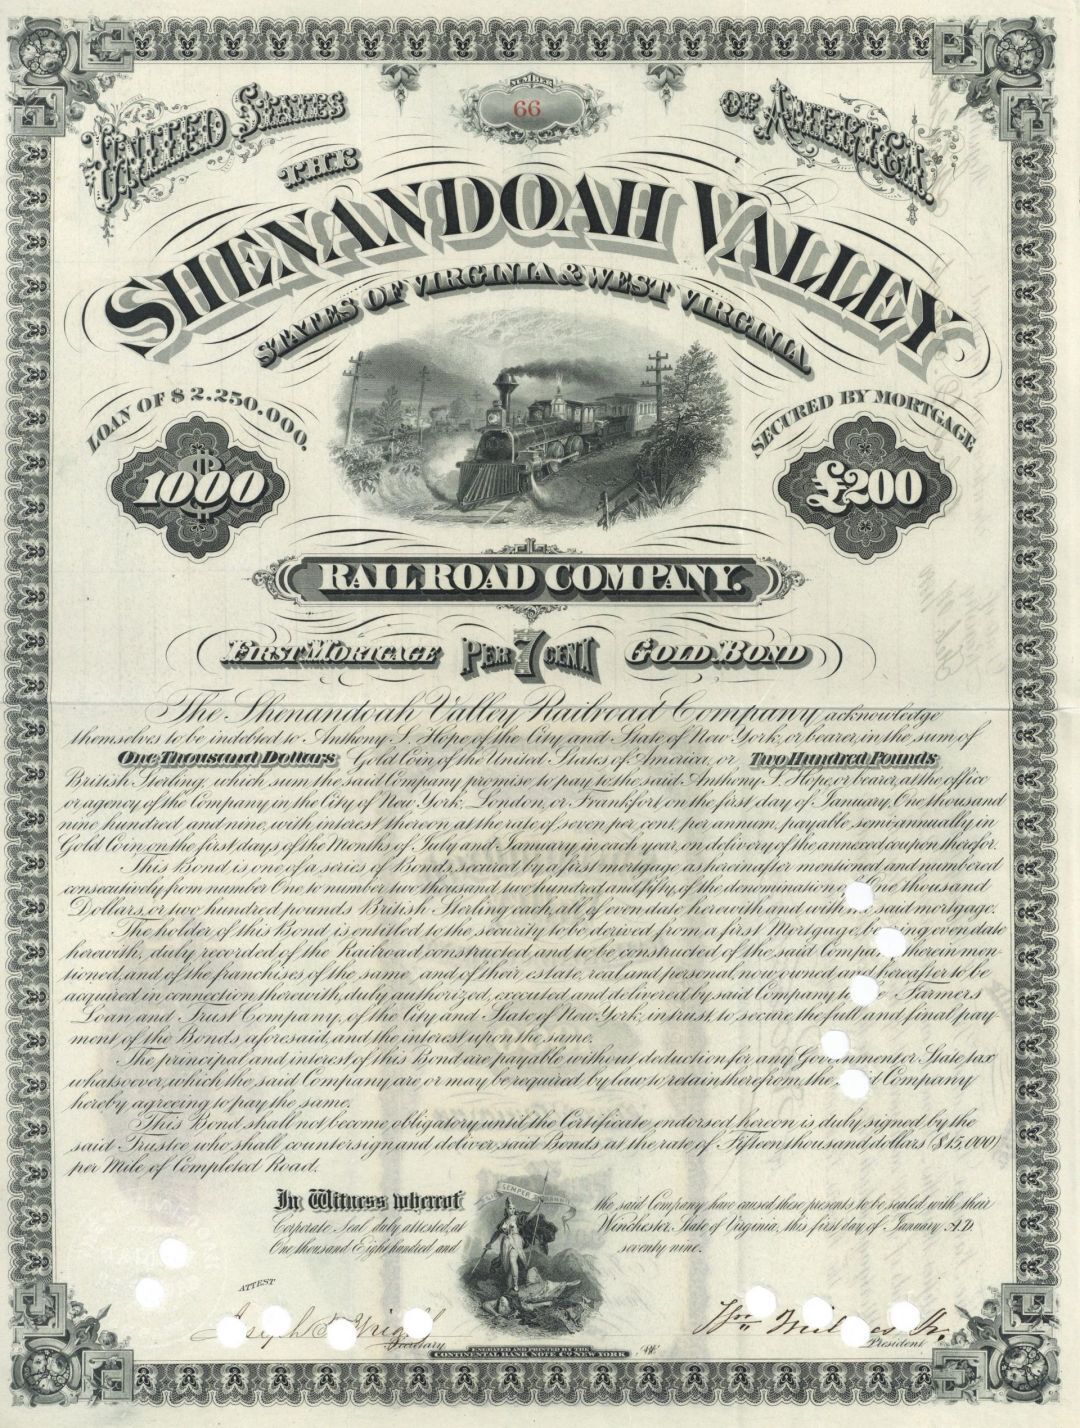 Shenandoah Valley Railroad Co. - 1879 dated $1,000/200 Railway 7% Gold Bond - Gr